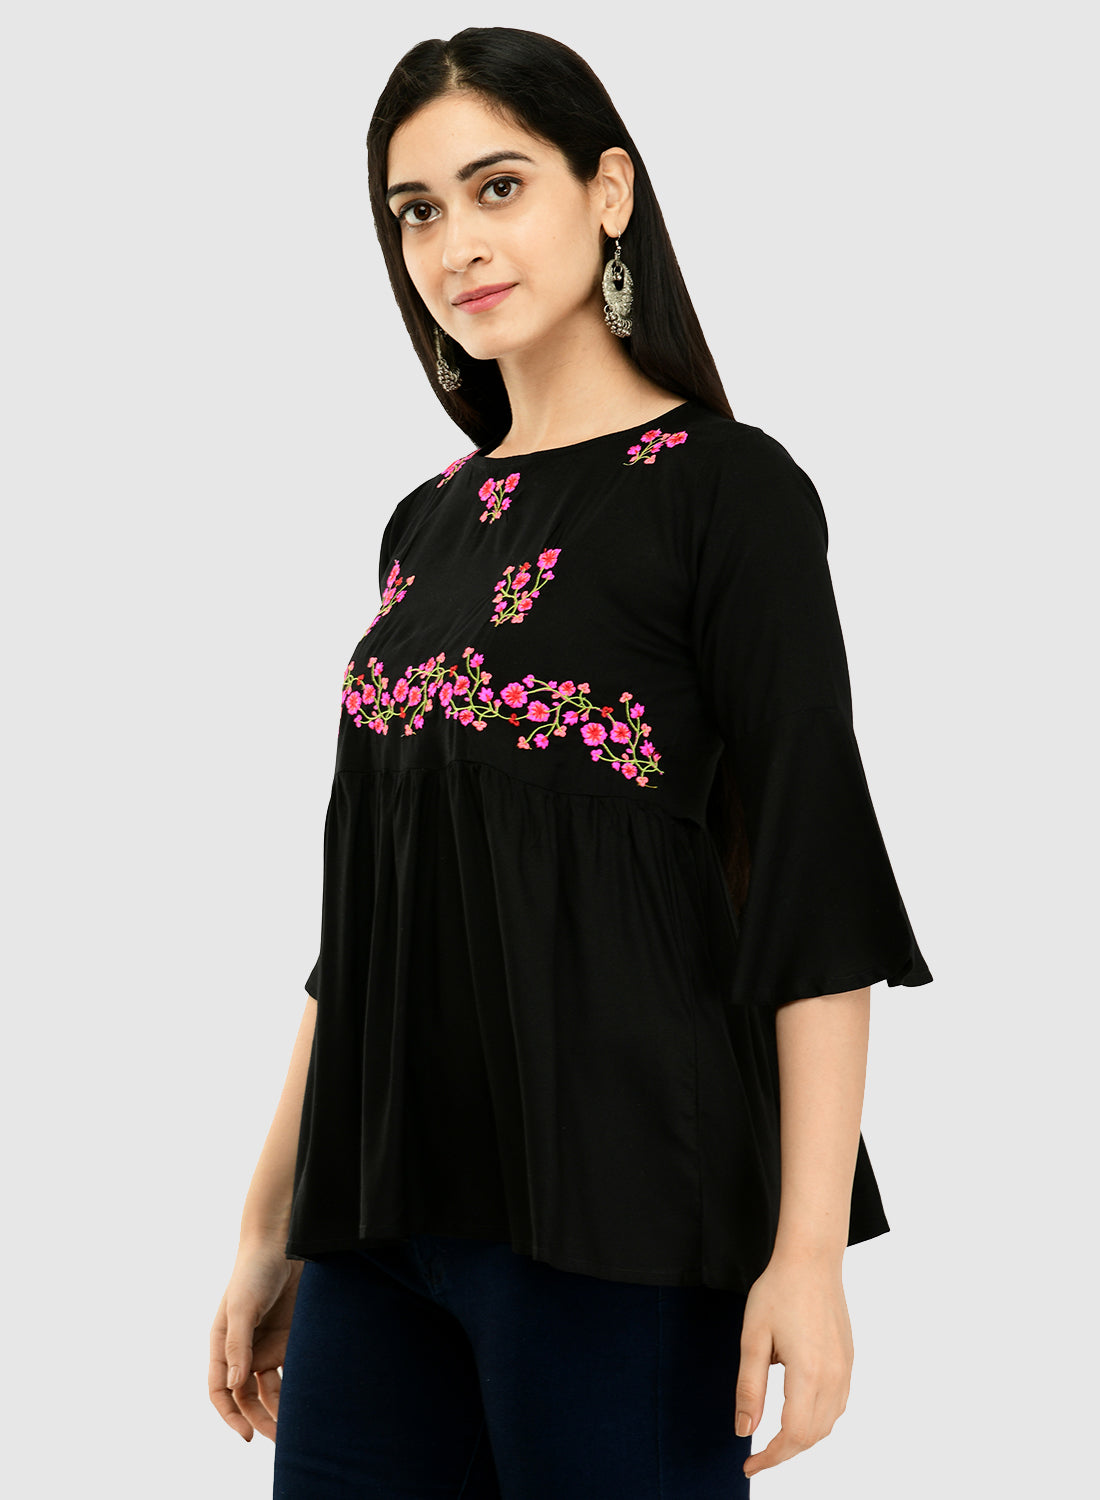 Women Black Top Casual Bell Sleeves Floral Print